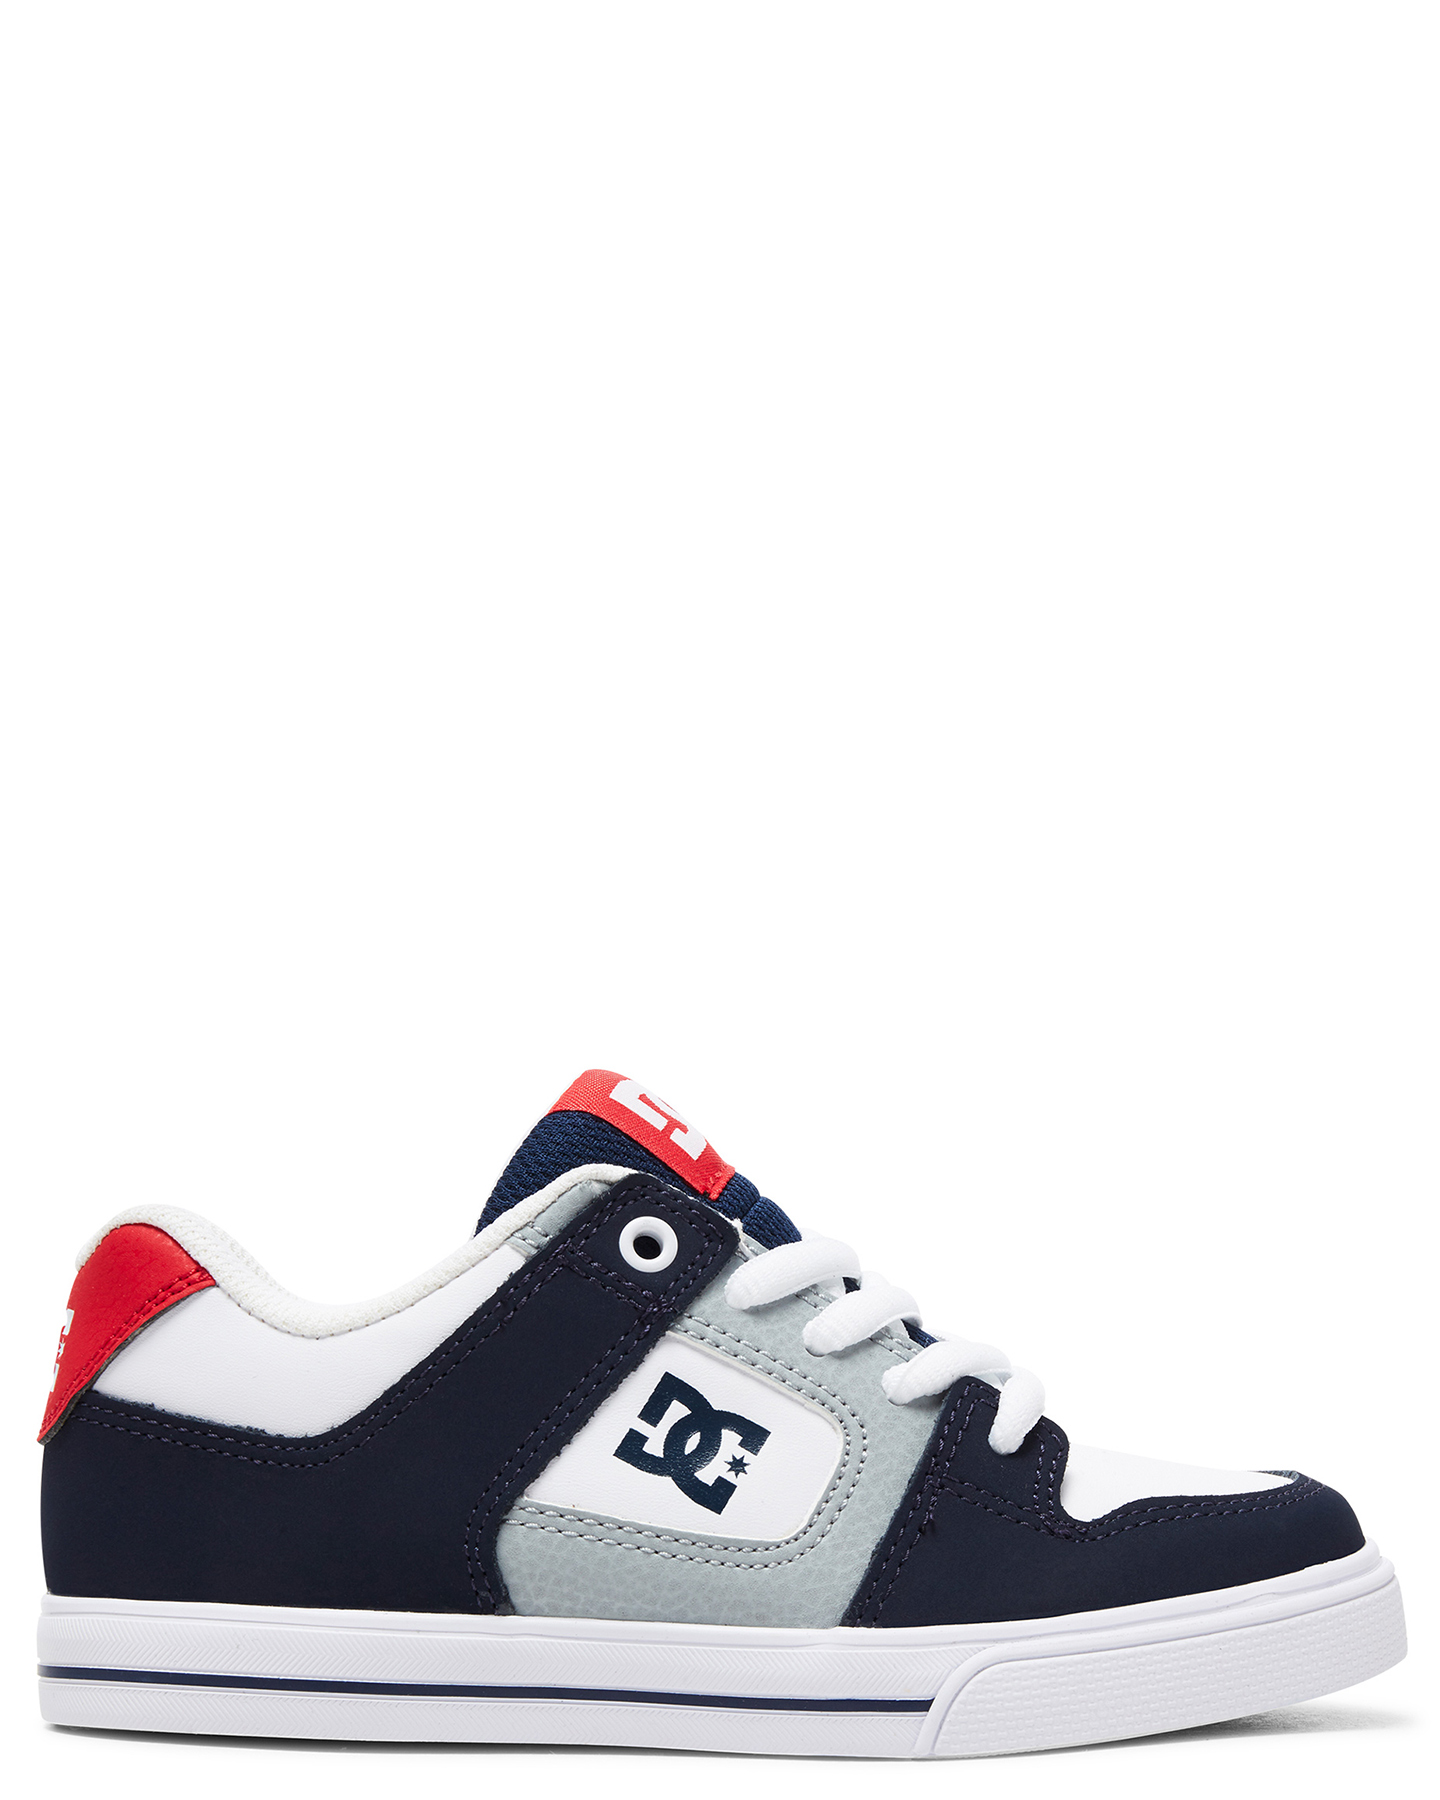 Dc Shoes Boys Pure Shoe - White/Navy 